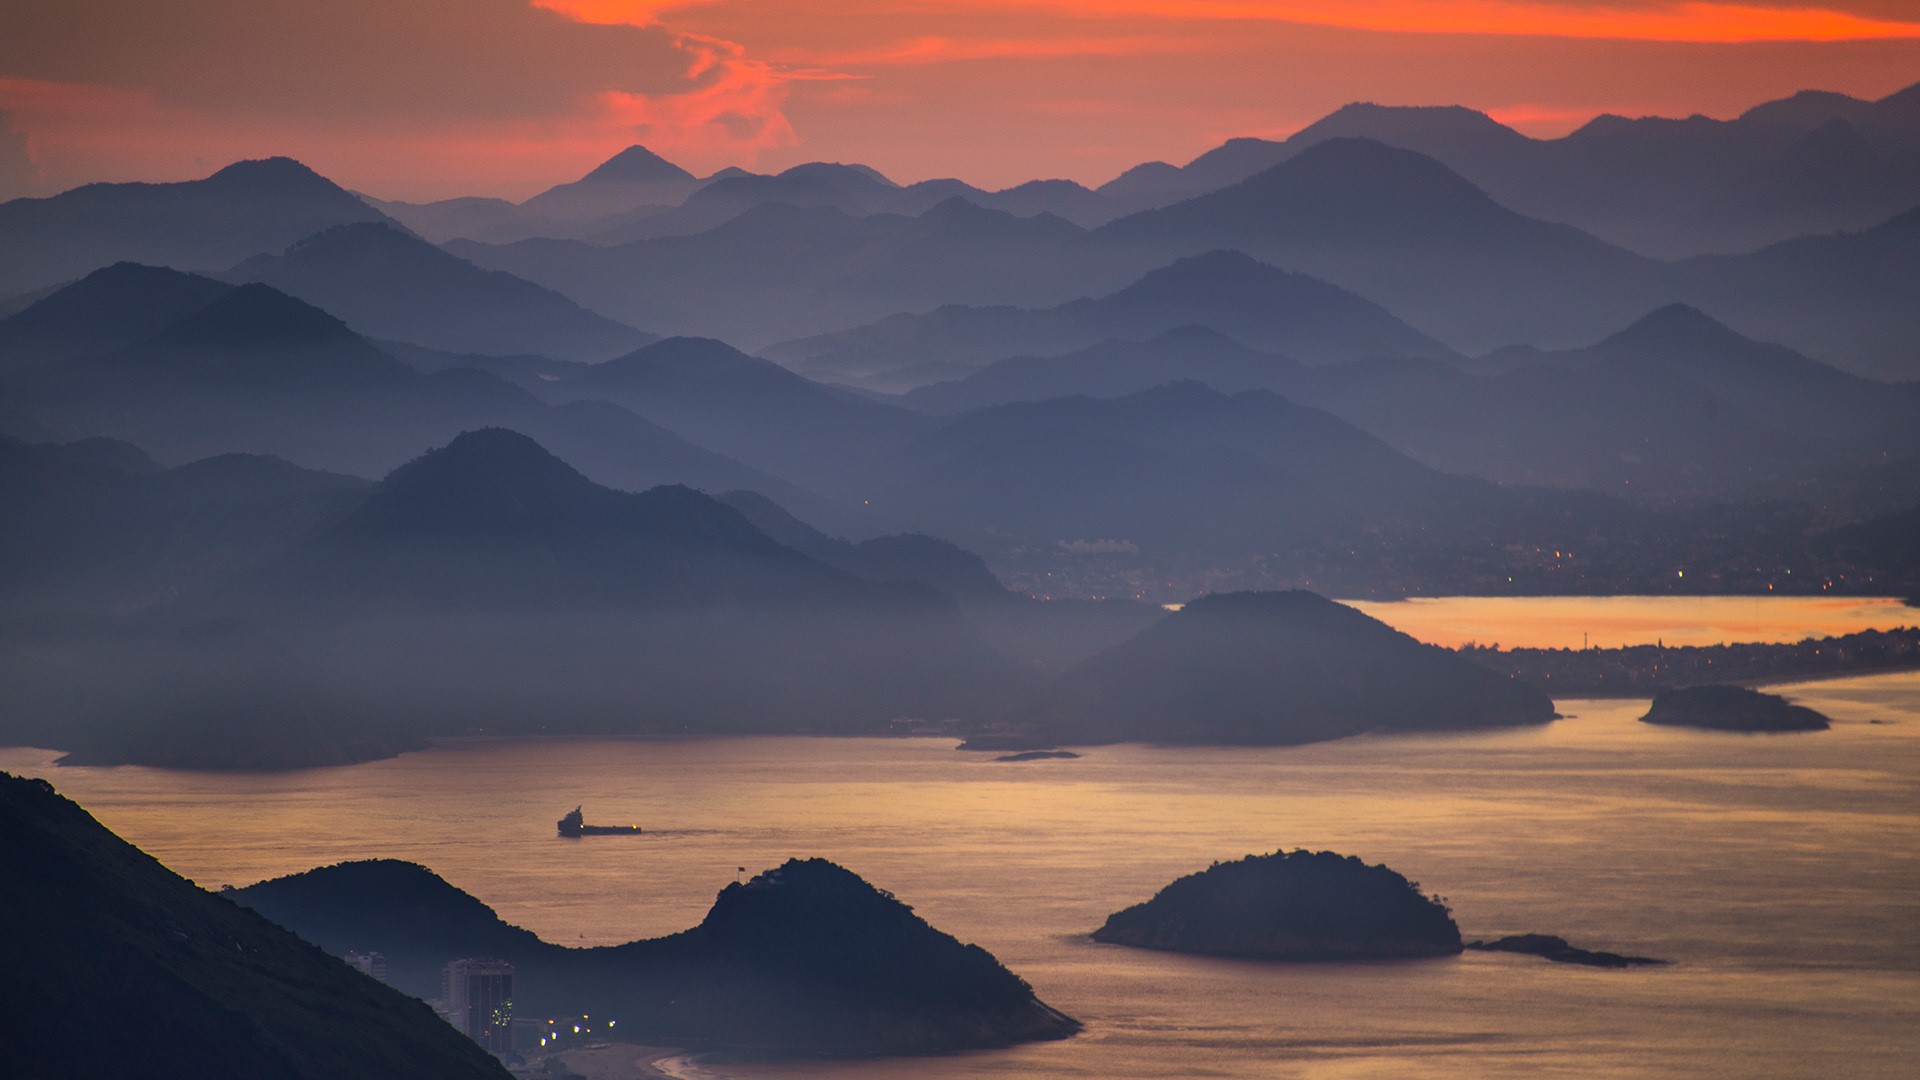 Landscape of Rio de Janeiro at dawn, Brazil | Windows 10 Spotlight Images